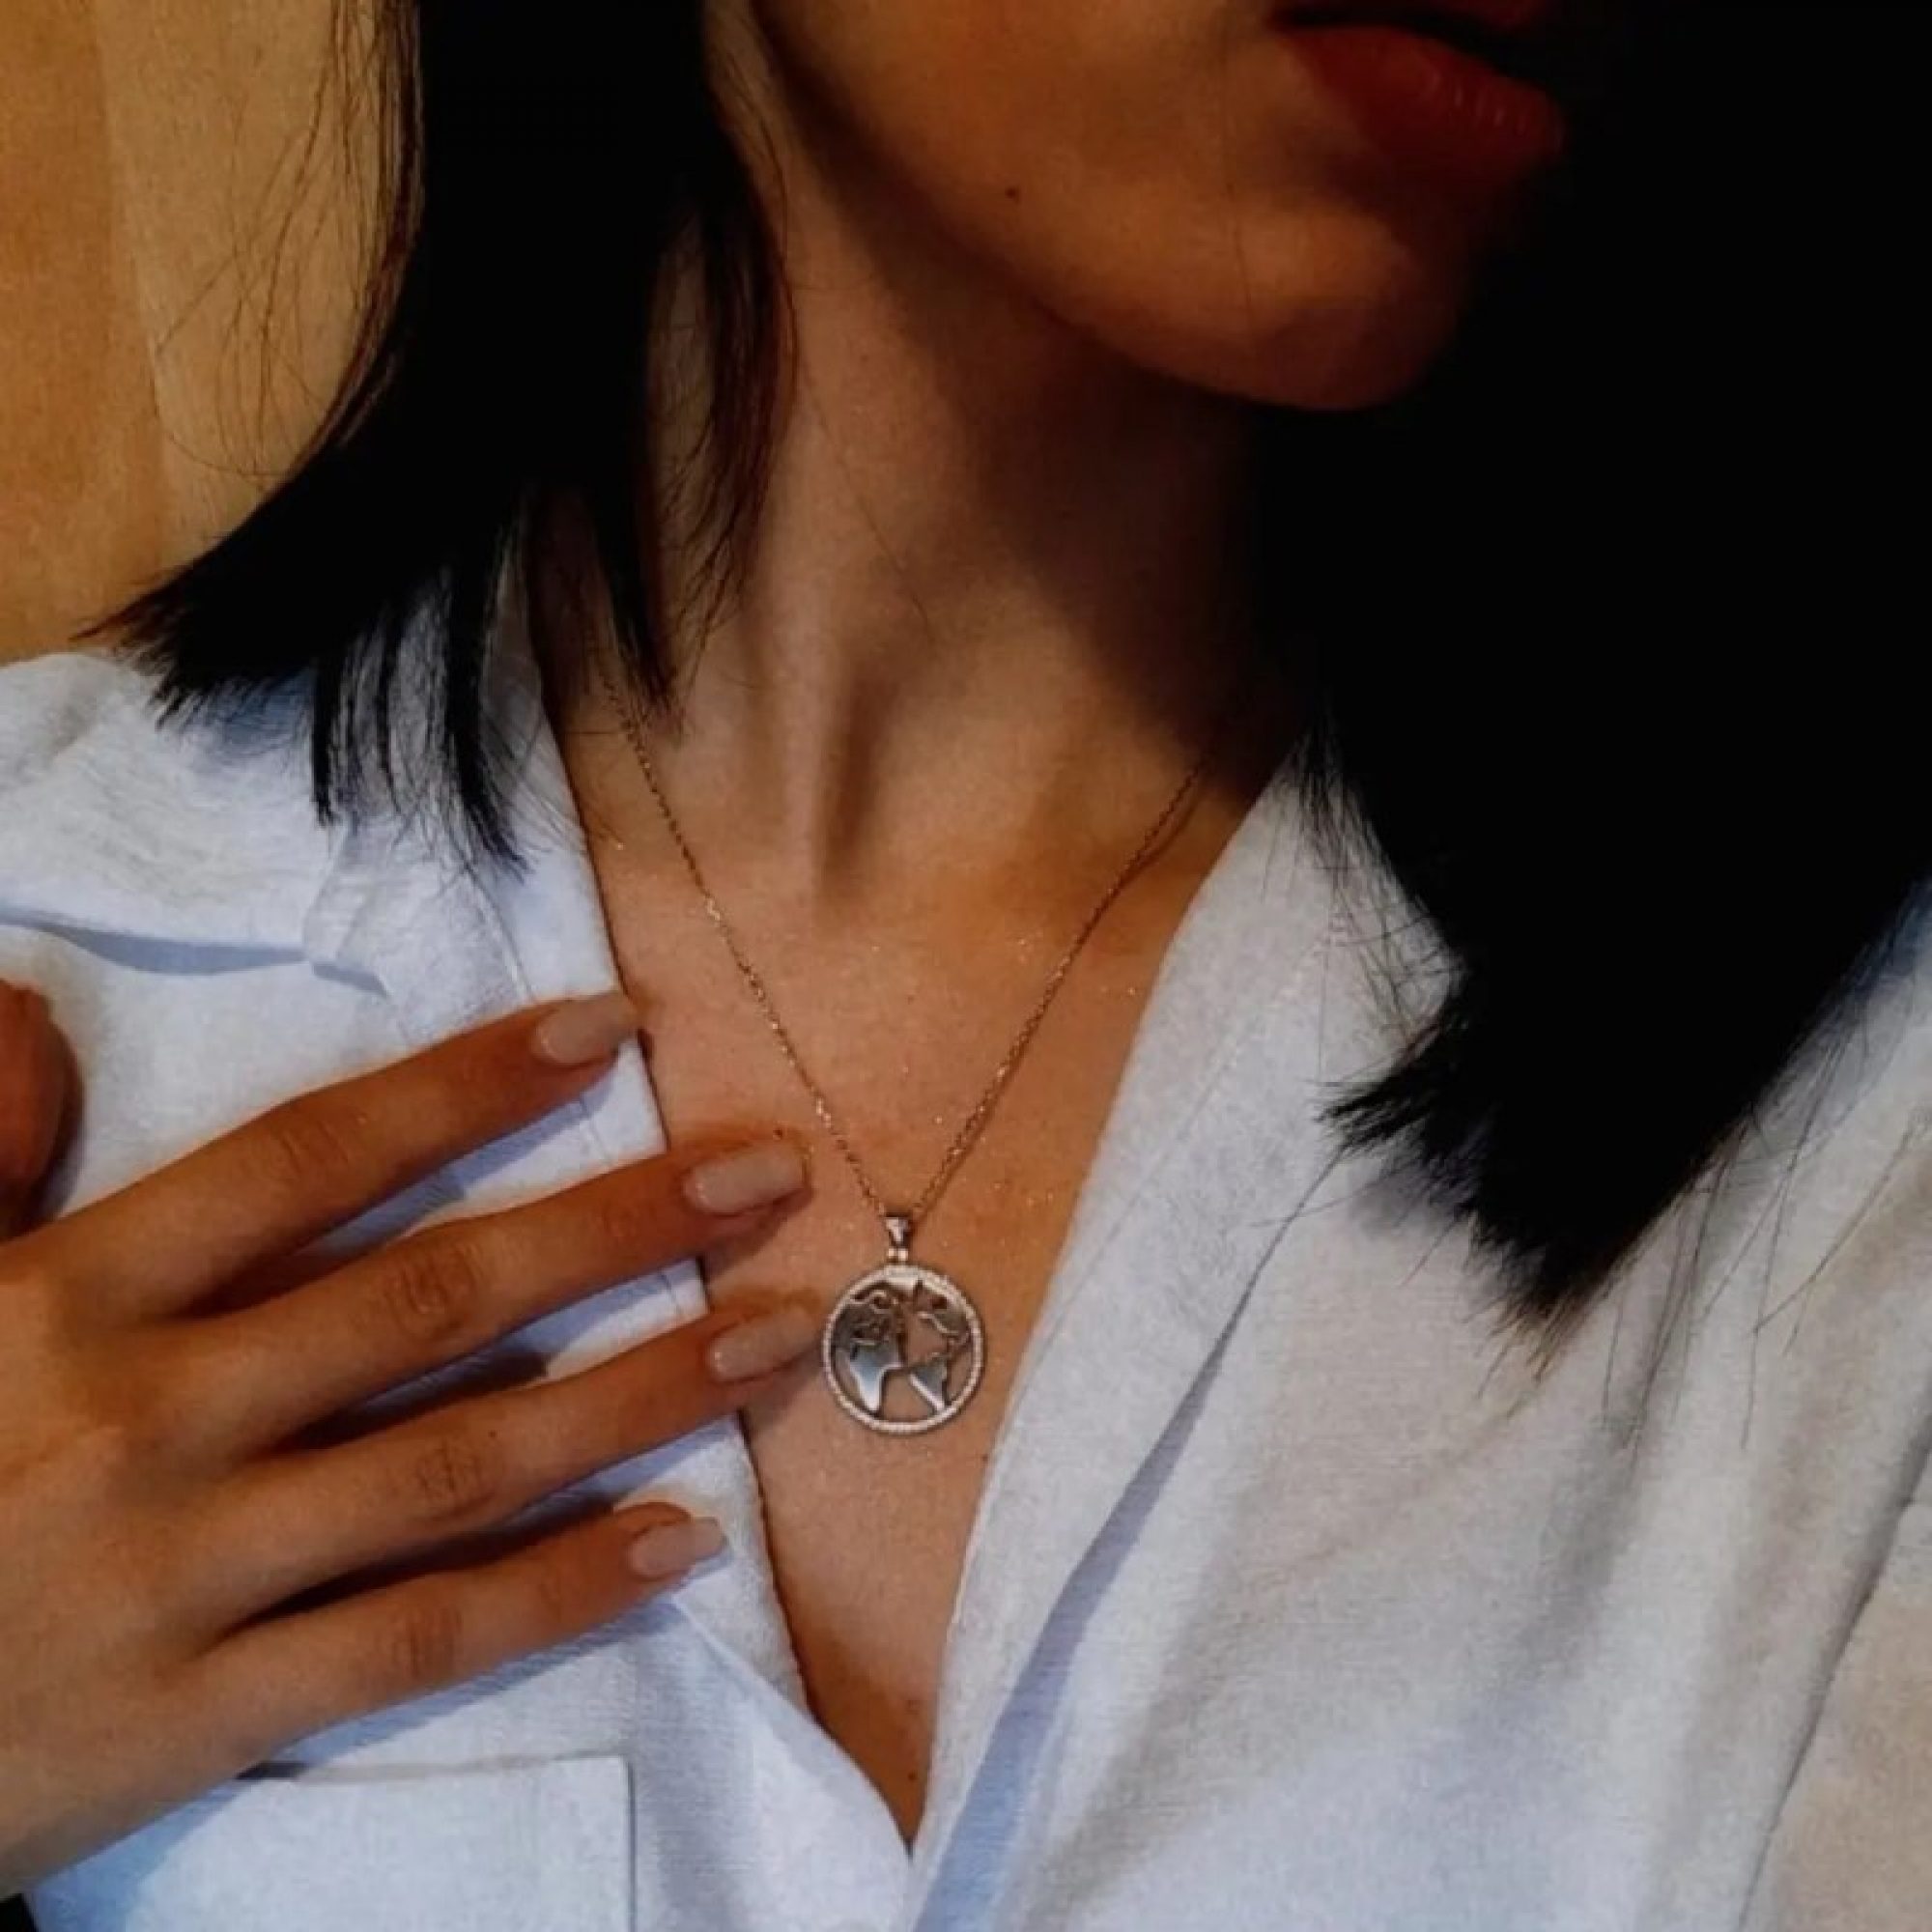 Silver globe necklace with zircon stones